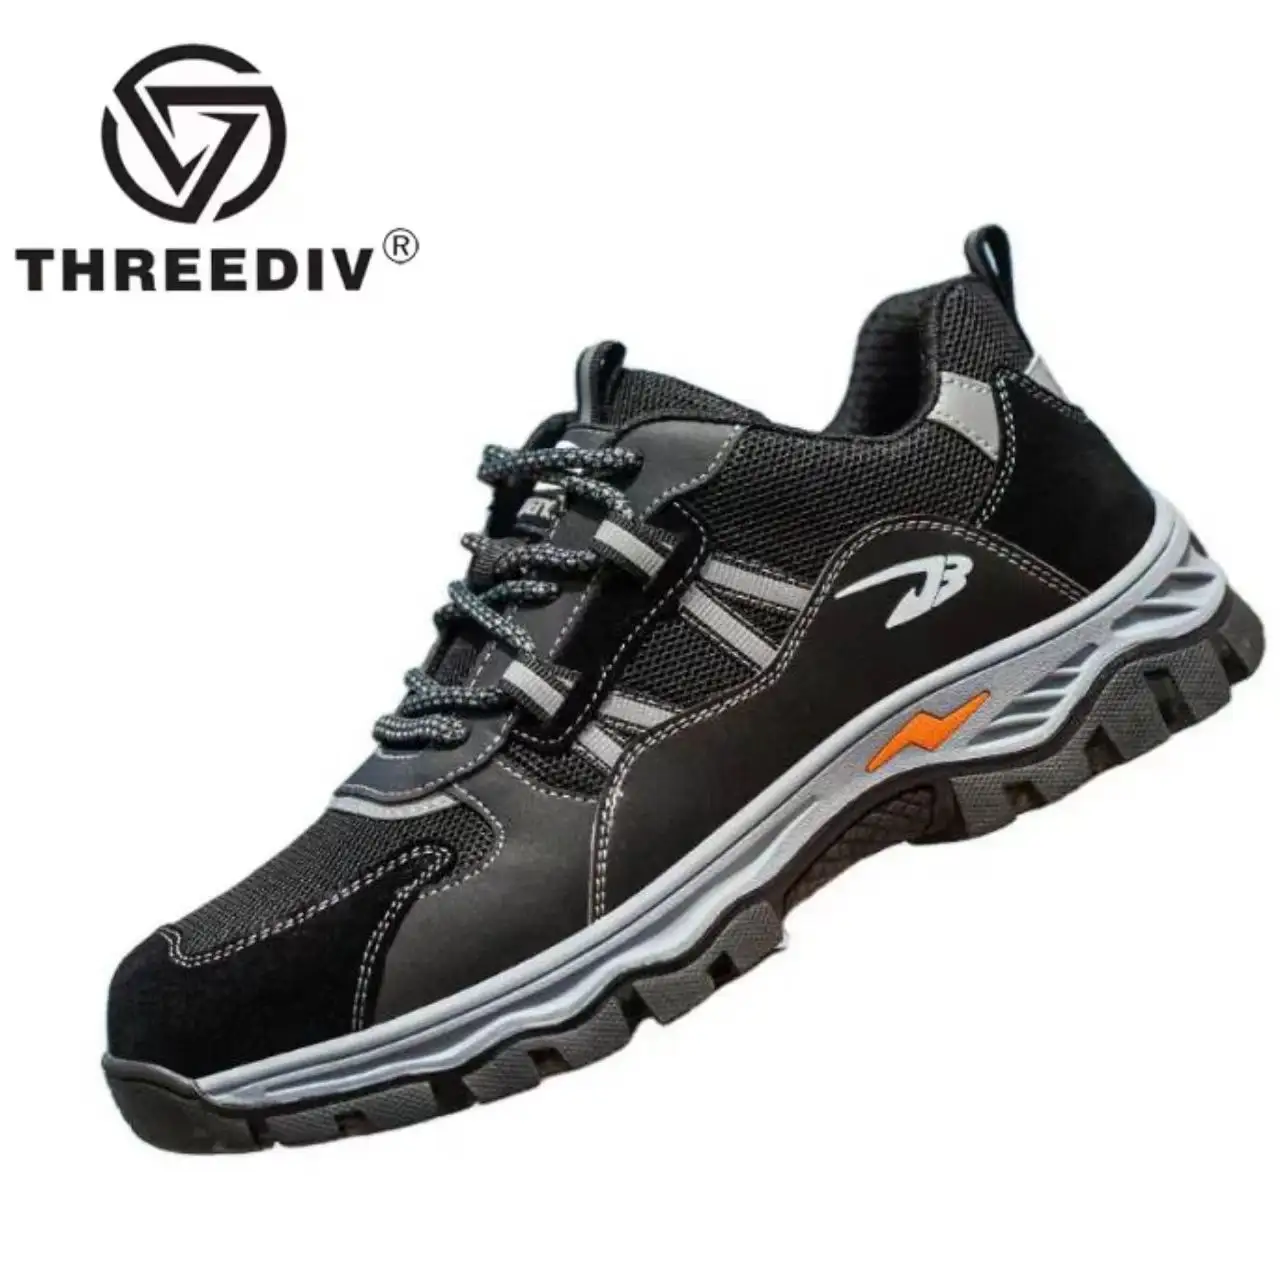 THREEDIV 뜨거운 판매 산업 보호 통기성 작업 부츠 스틸 안티 스매싱 안티 피어싱 블랙 메쉬 안전 신발